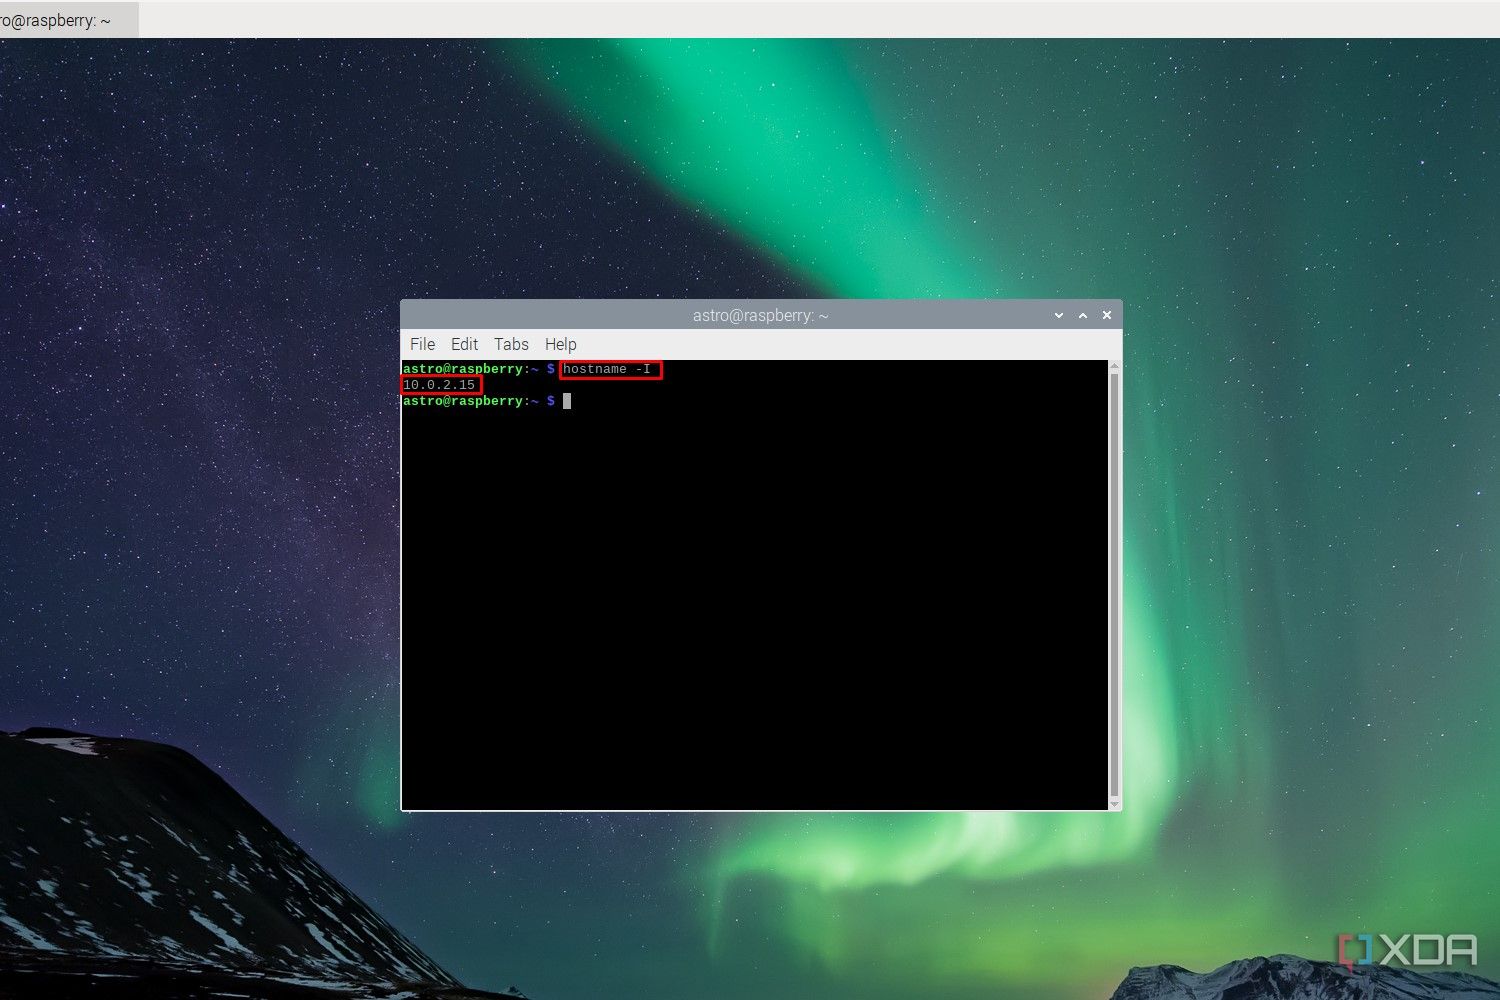 Raspberry Pi OS screenshot that highlights the IPv4 address in the terminal